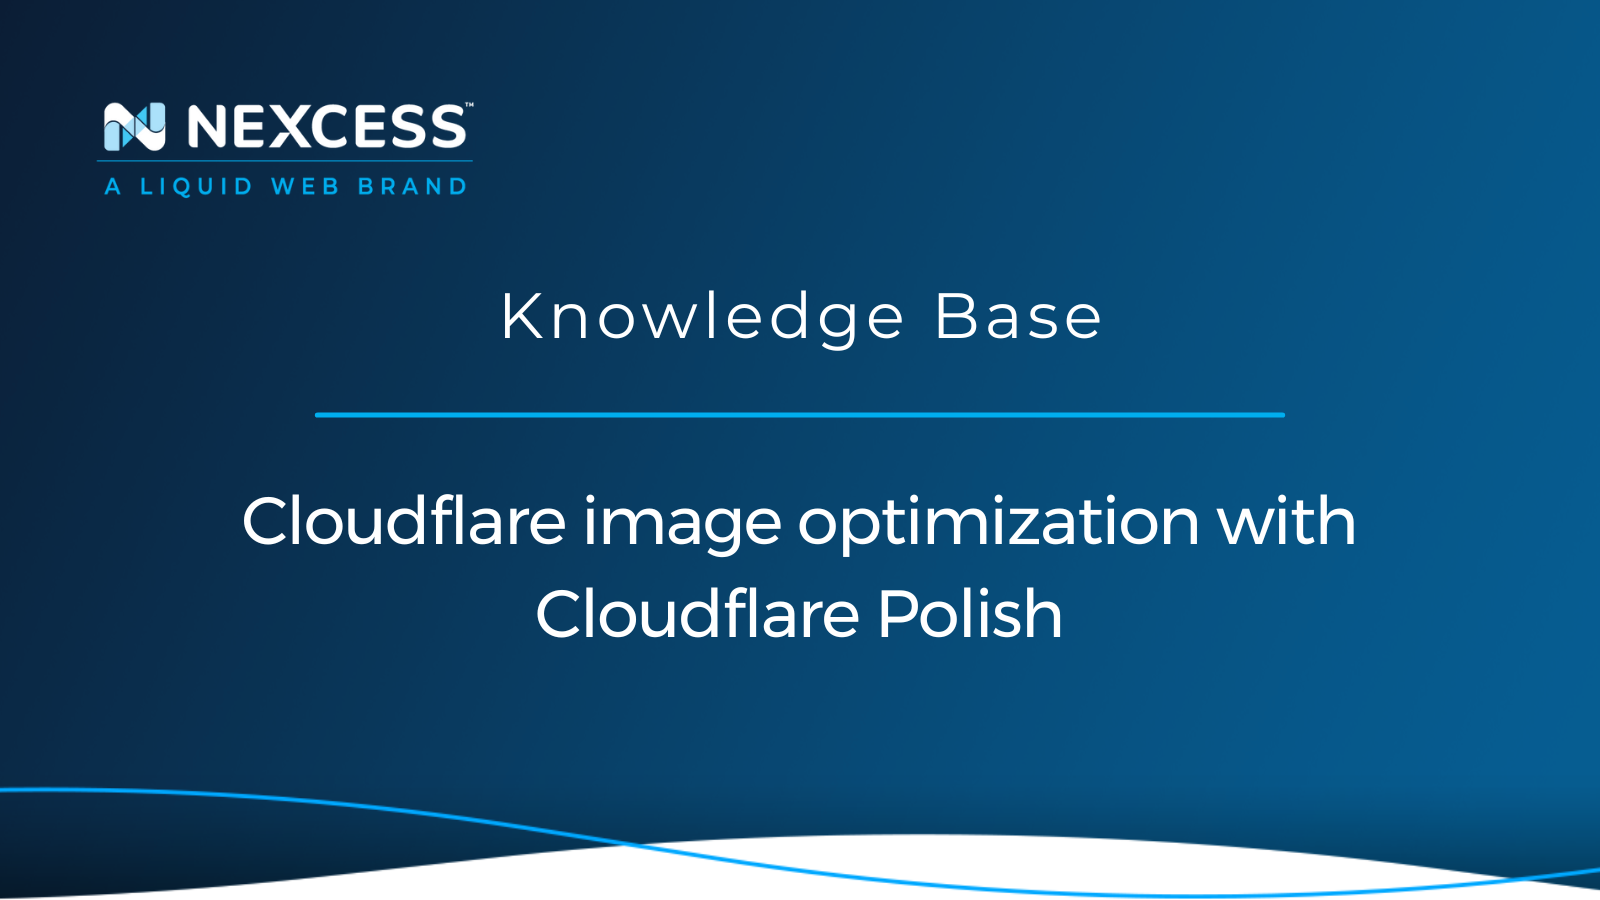 Cloudflare image optimization with Cloudflare Polish